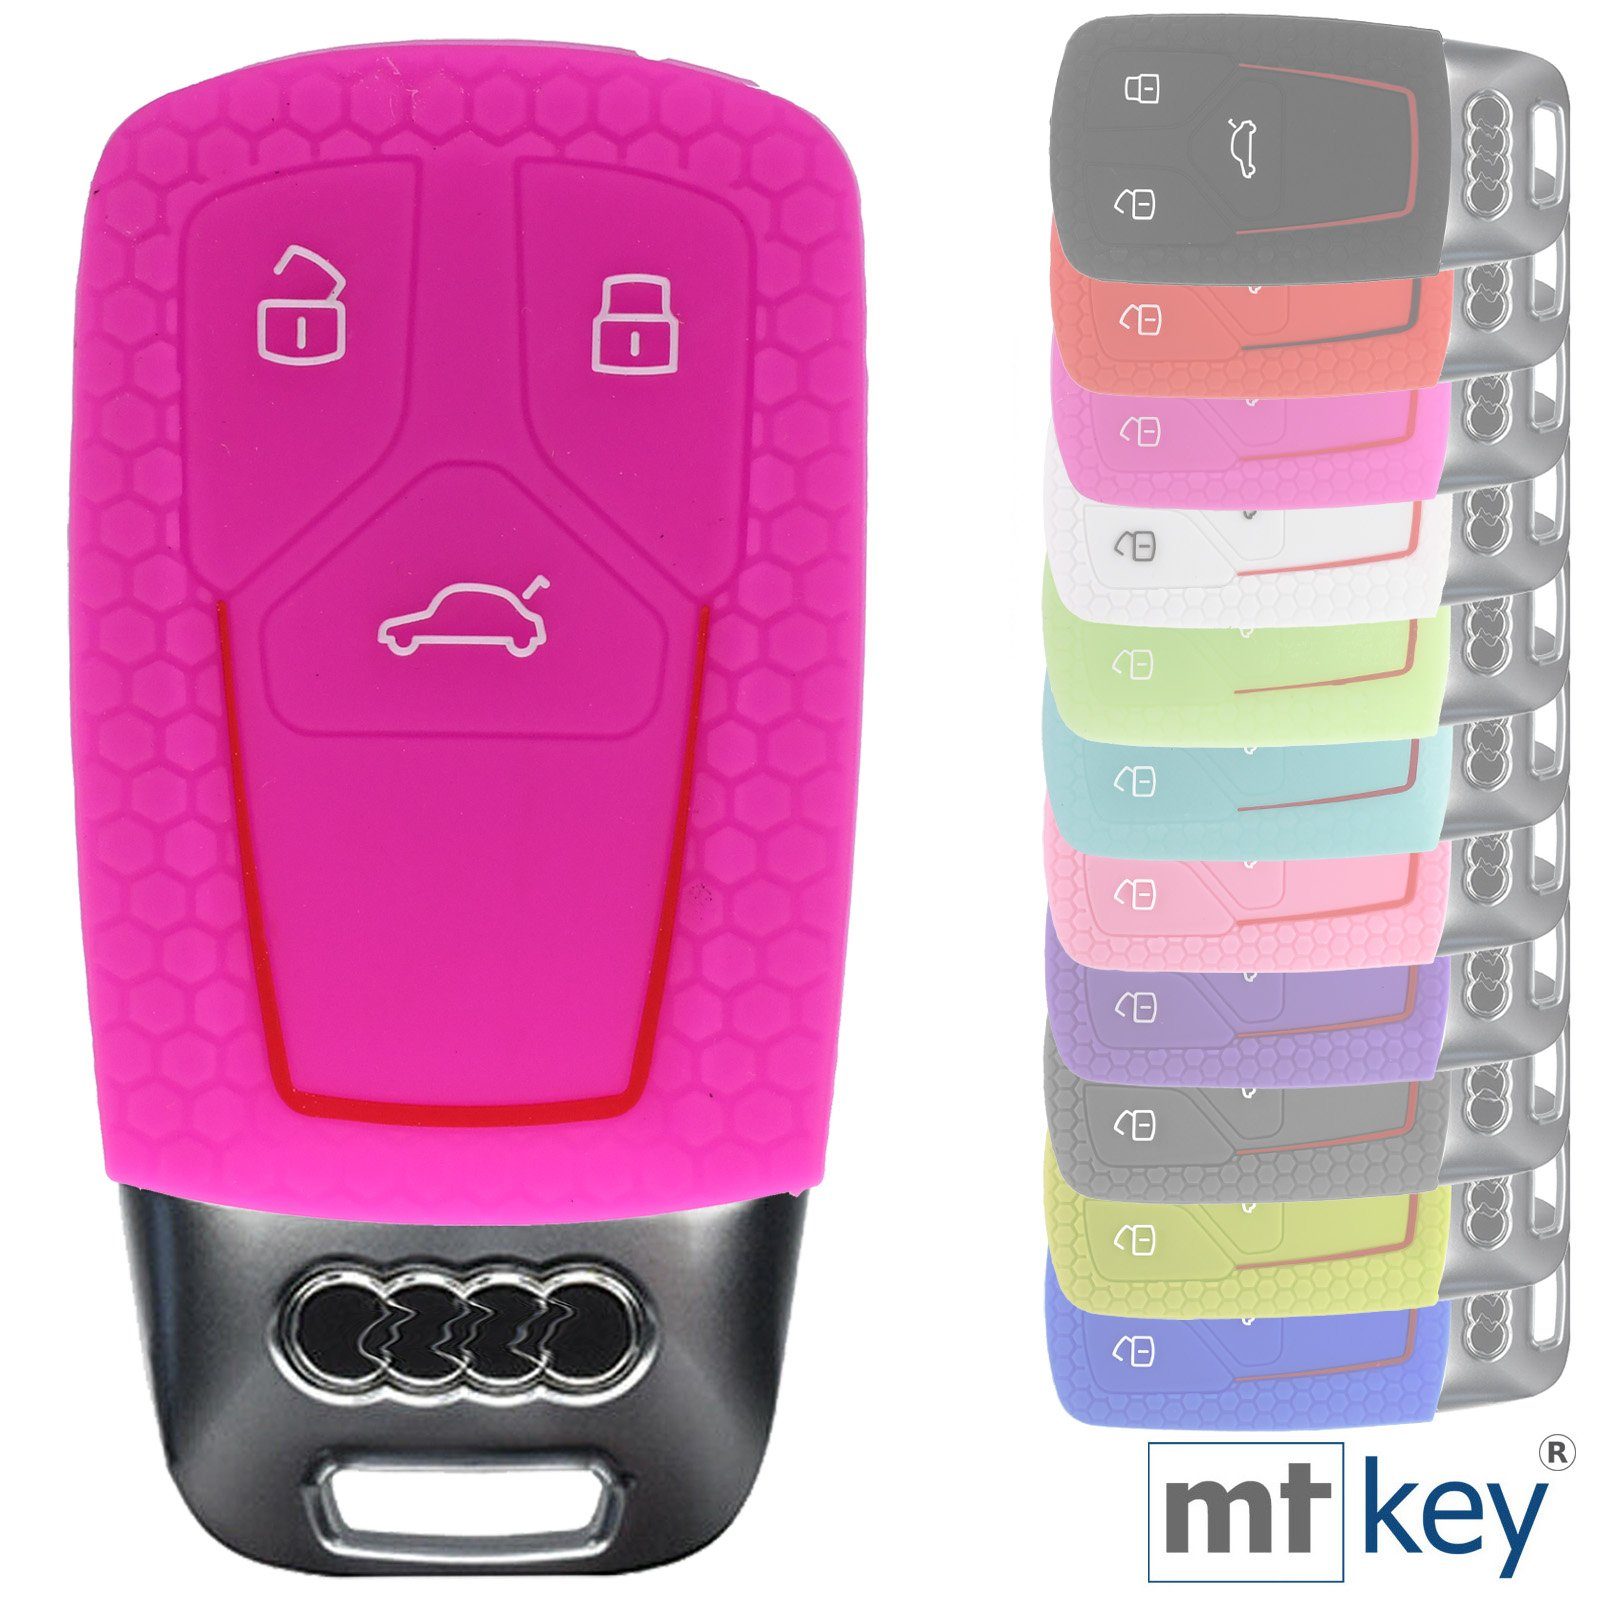 A8 SMARTKEY Schutzhülle KEYLESS Q2 A4 Silikon Q5 Wabe + im Audi A6 Autoschlüssel für Schlüsselband, Tasten Schlüsseltasche Q8 mt-key A7 Design 3 TT Q7 Pink A5